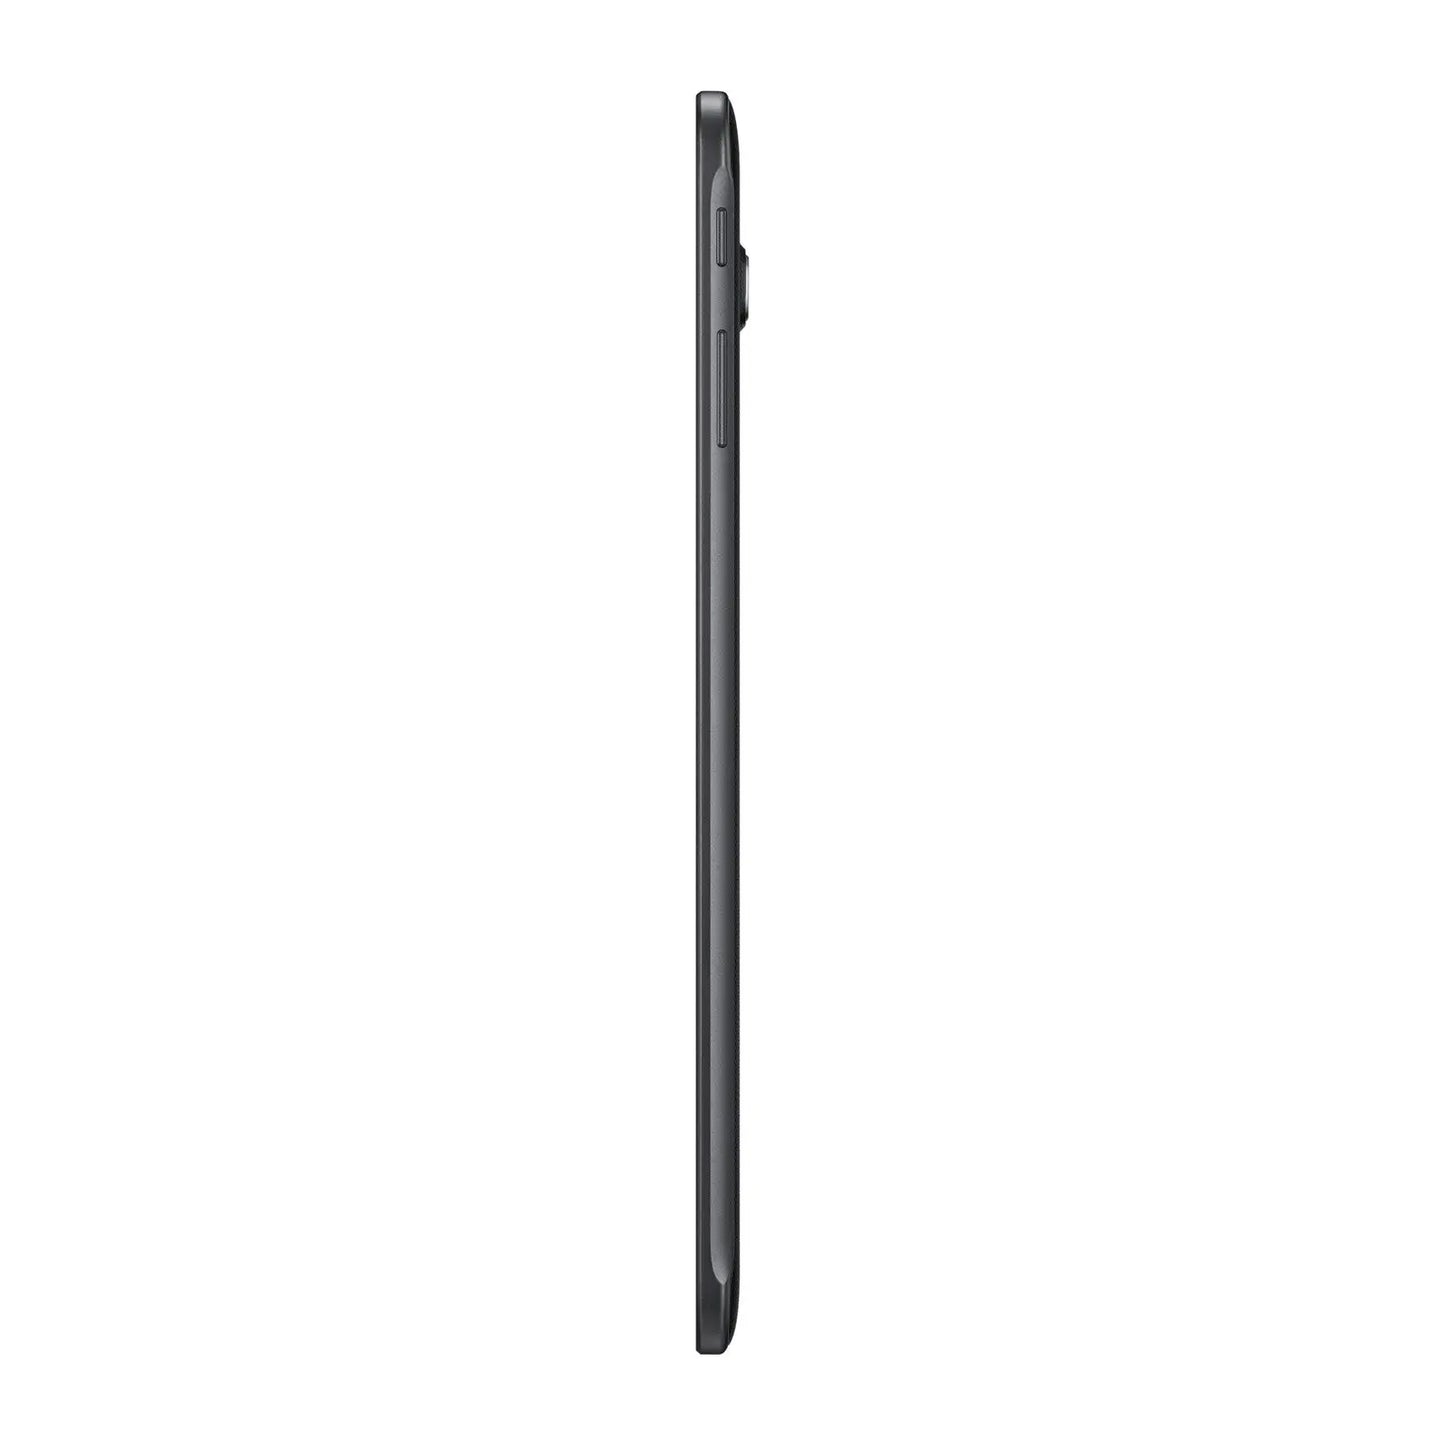 Tablette tactile Samsung Galaxy Tab E 9,6" 8 Go Wifi Noire - SM-T560 Samsung